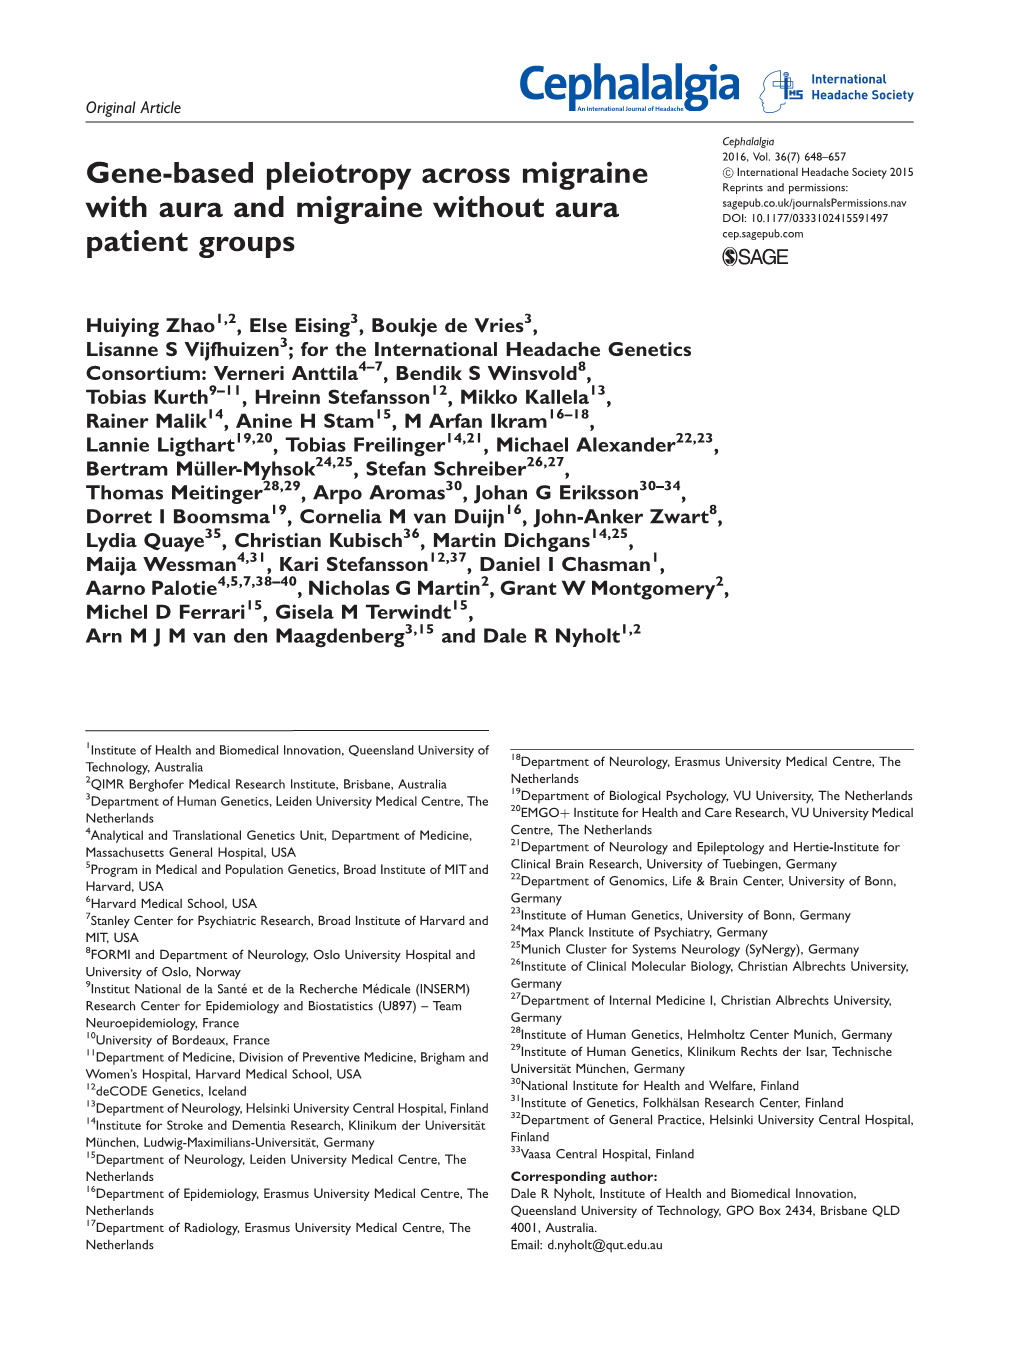 Gene-Based Pleiotropy Across Migraine with Aura